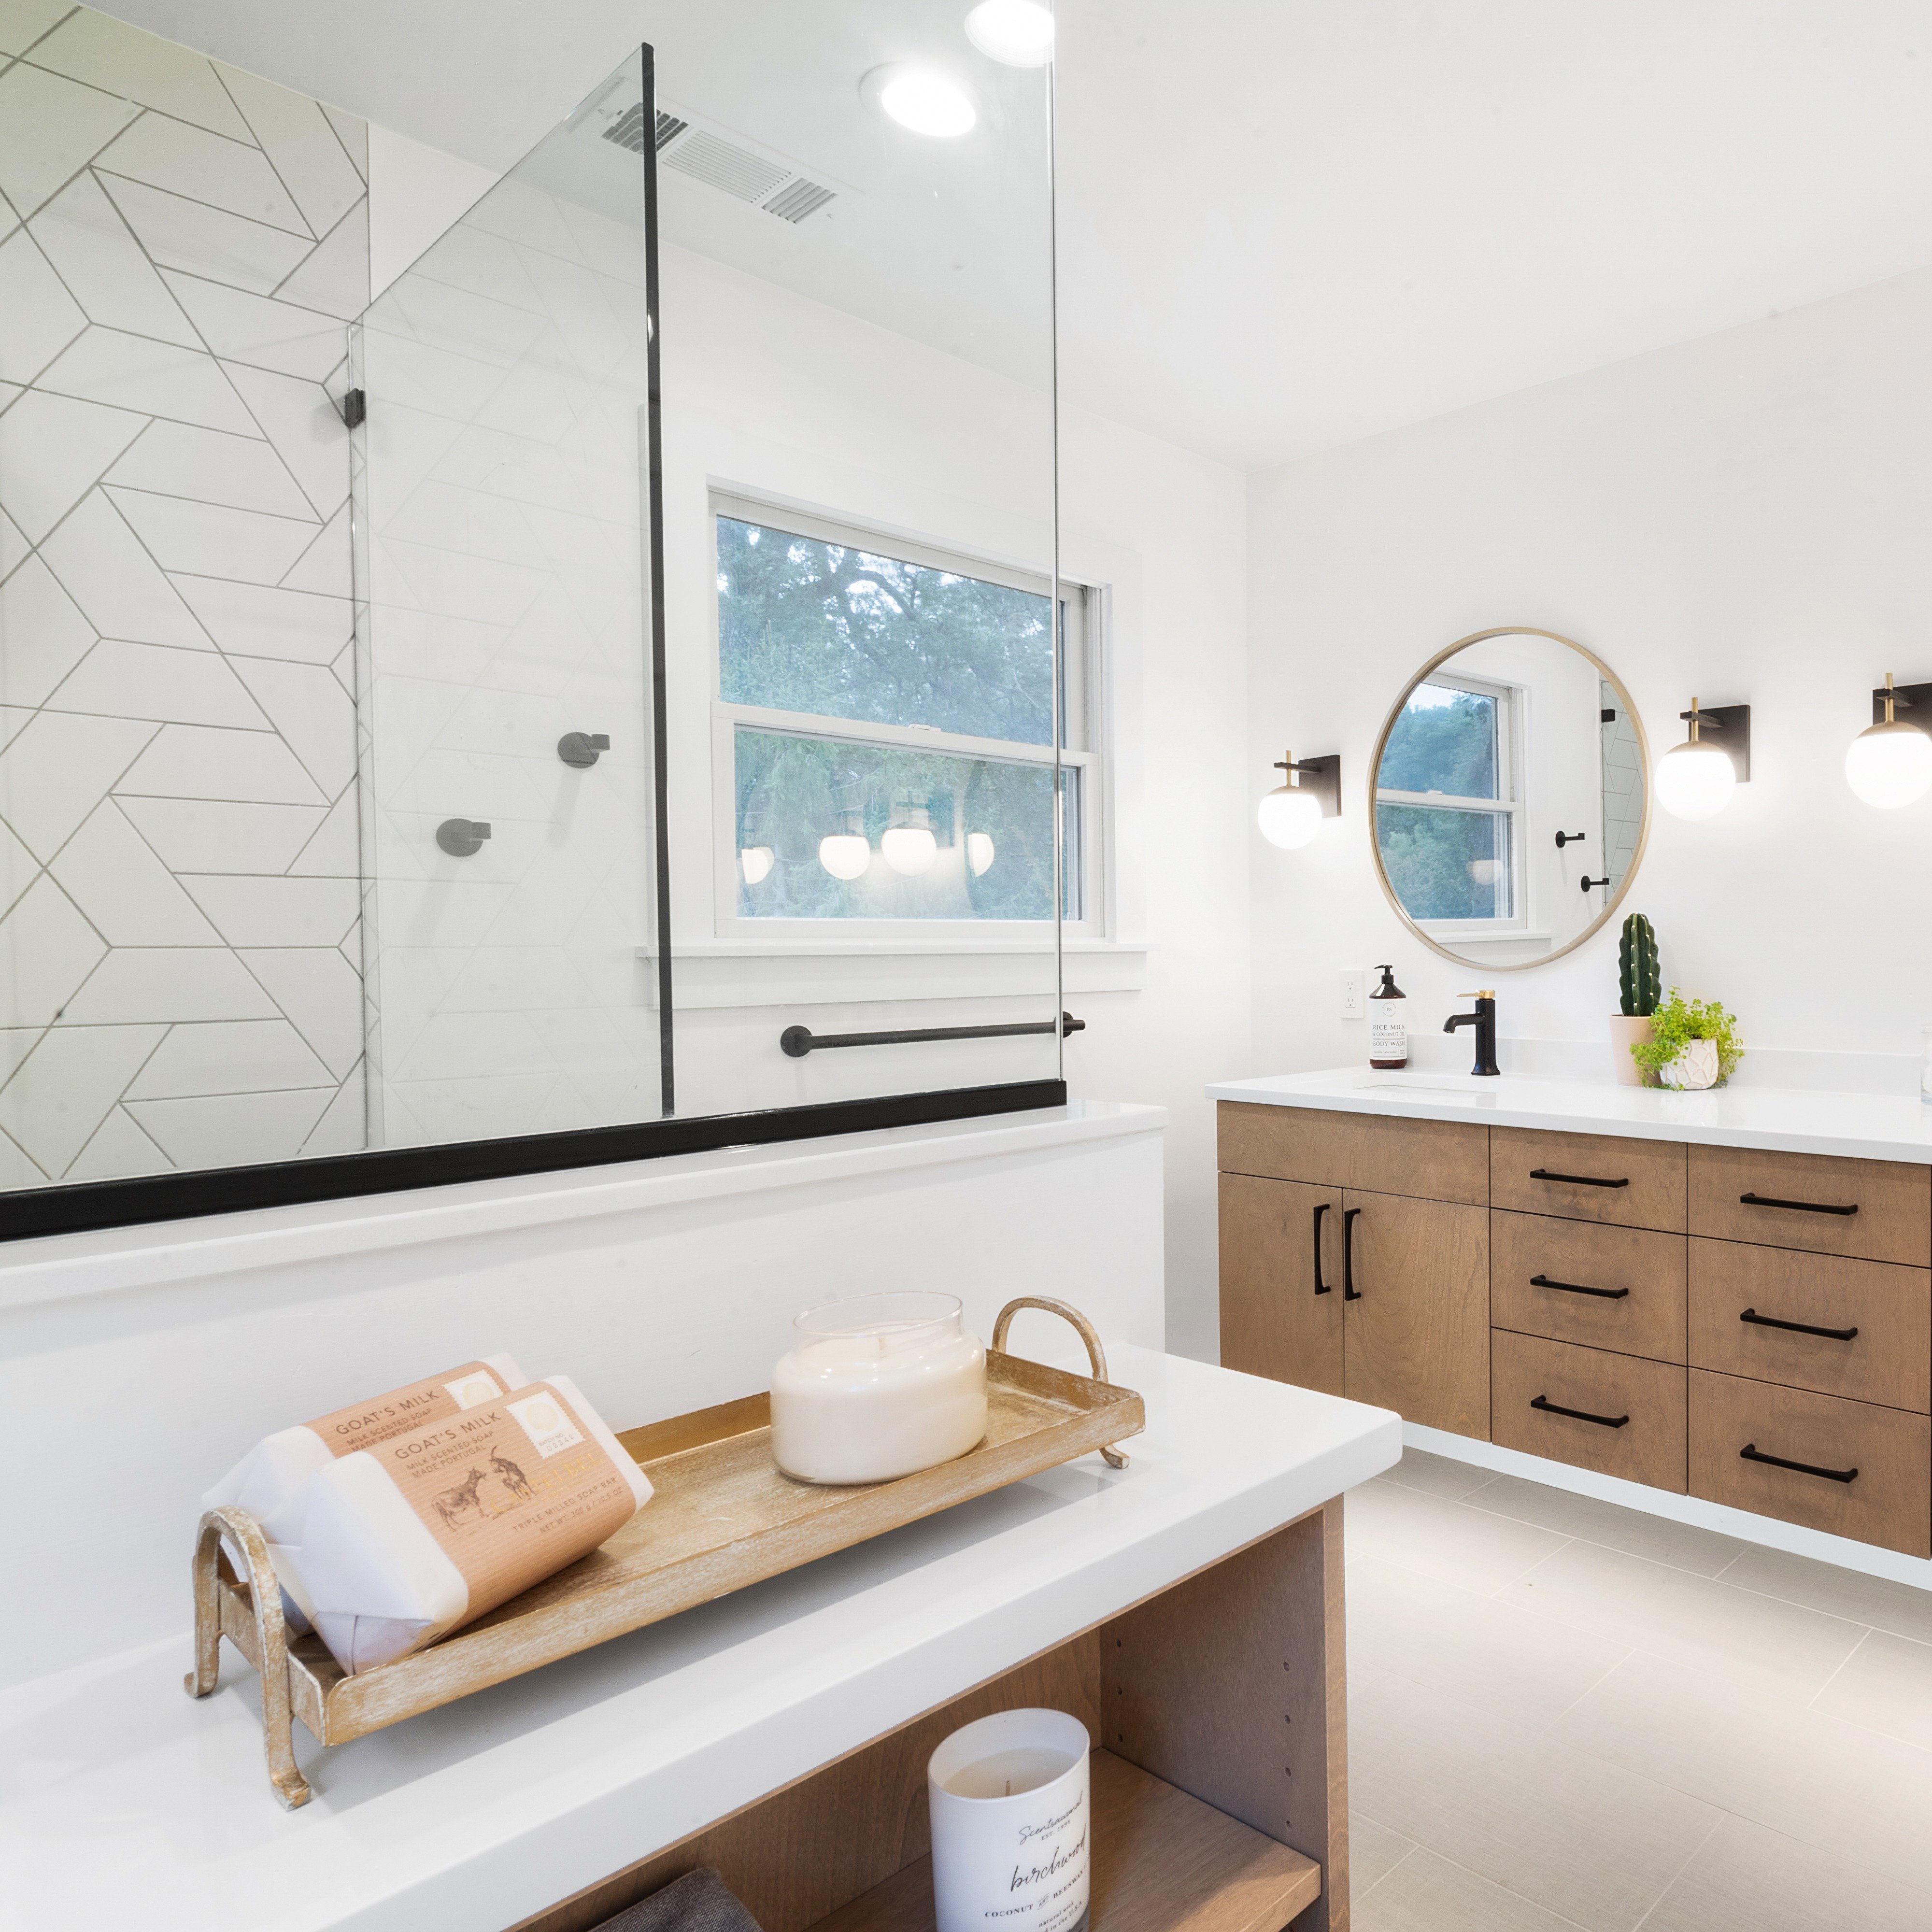 Denville bathroom remodel with floating vanity